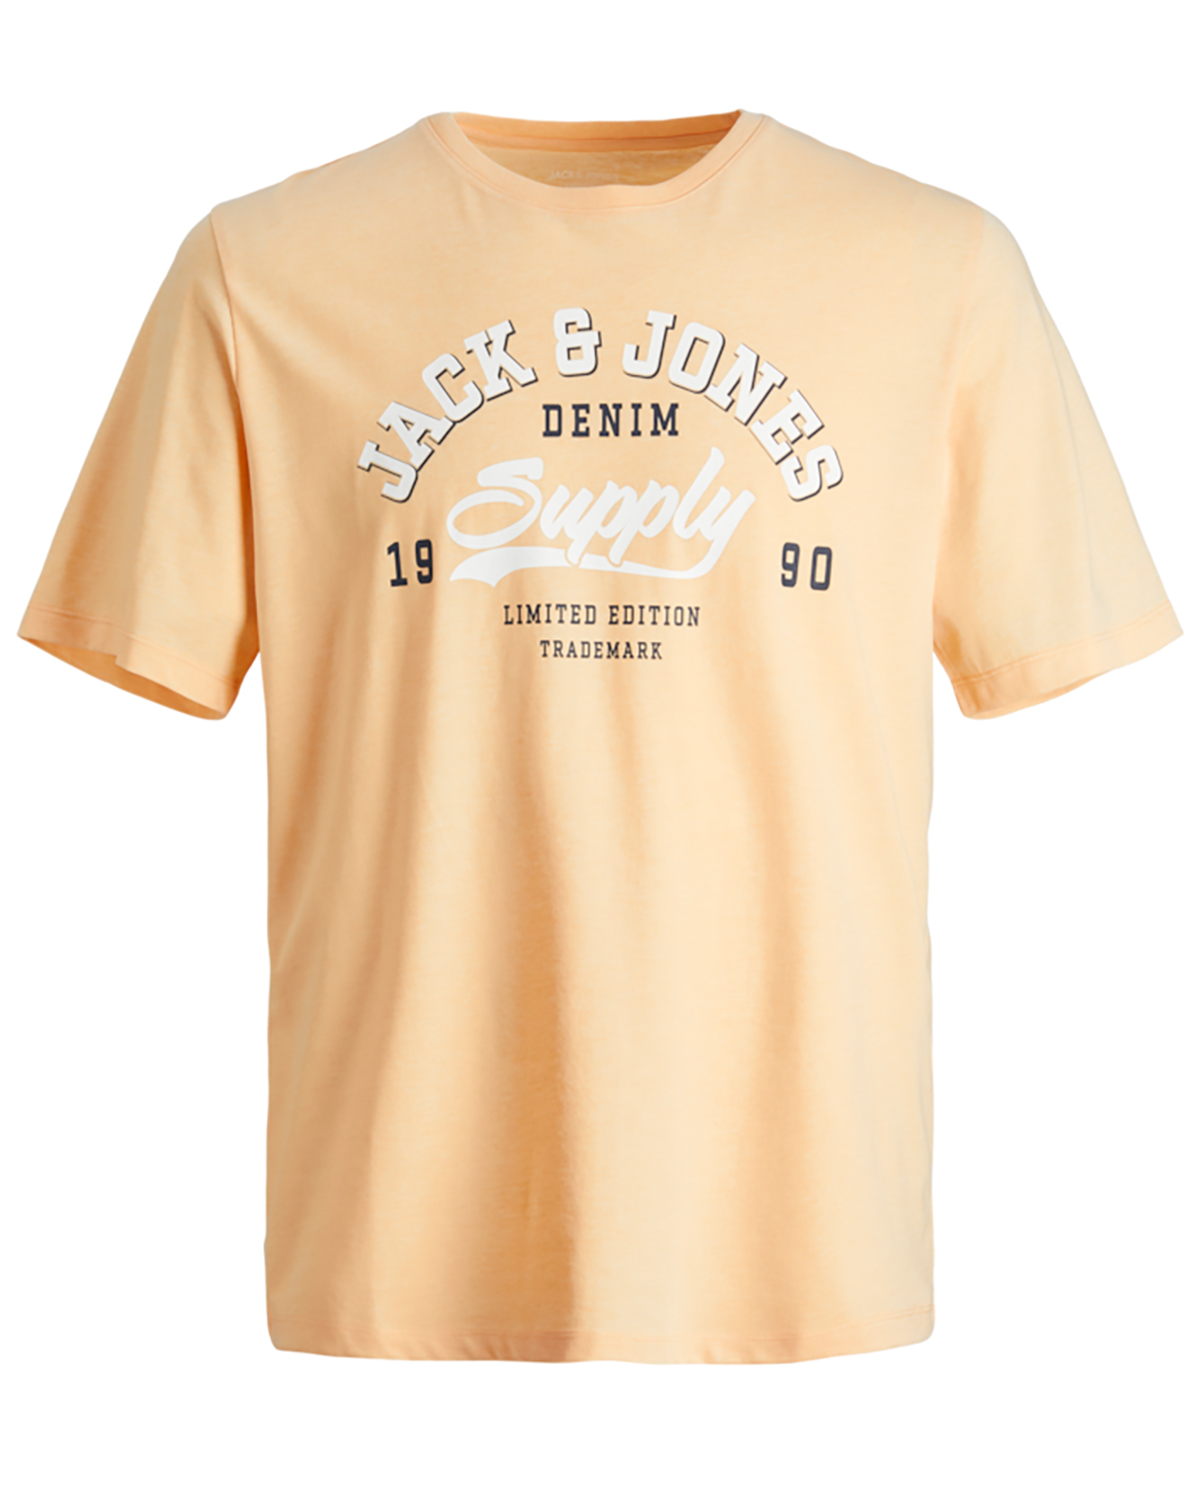 Jack & Jones JR t-shirt s/s, Logo tee, sand - 176,16år